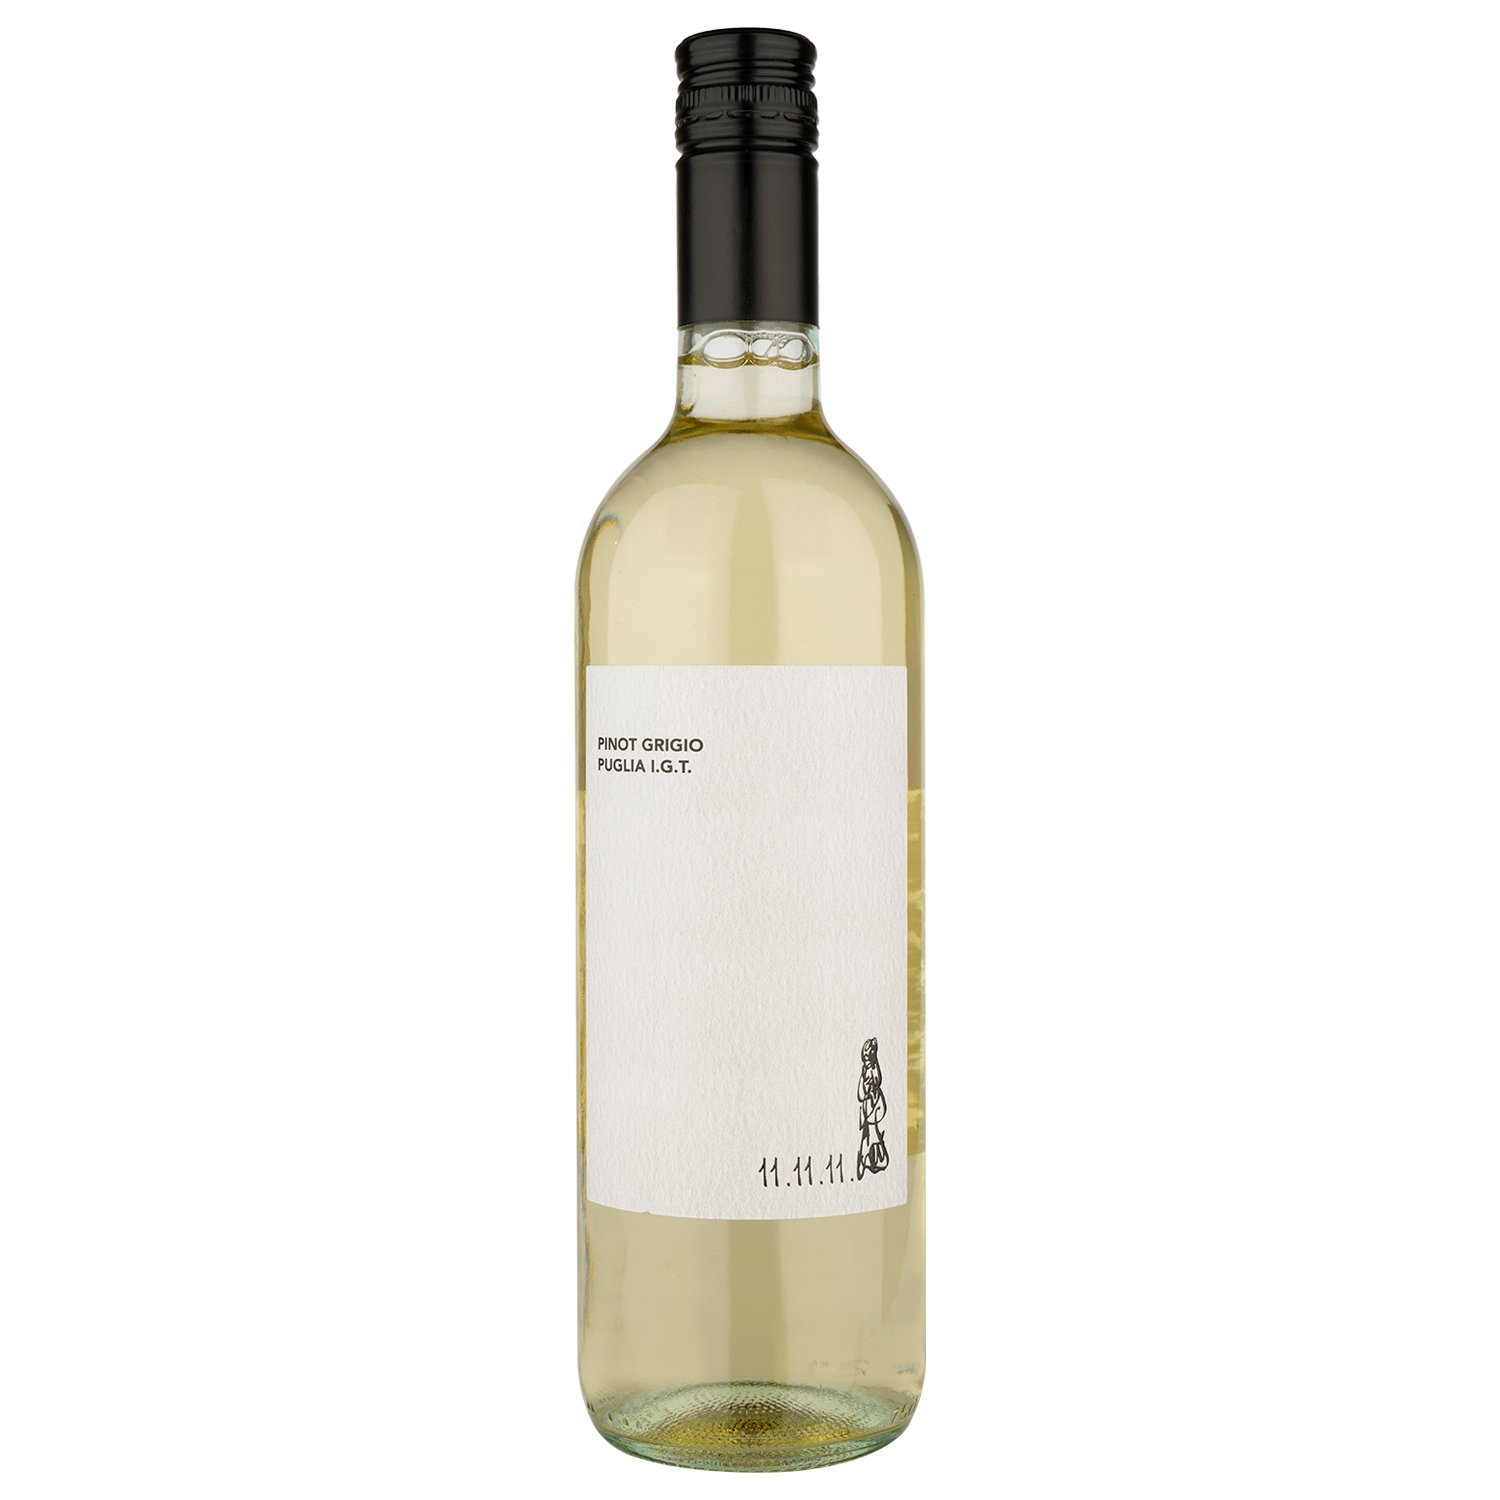 Вино 11.11.11. Puglia Pinot Grigio IGT, біле, сухе, 0,75 л - фото 1